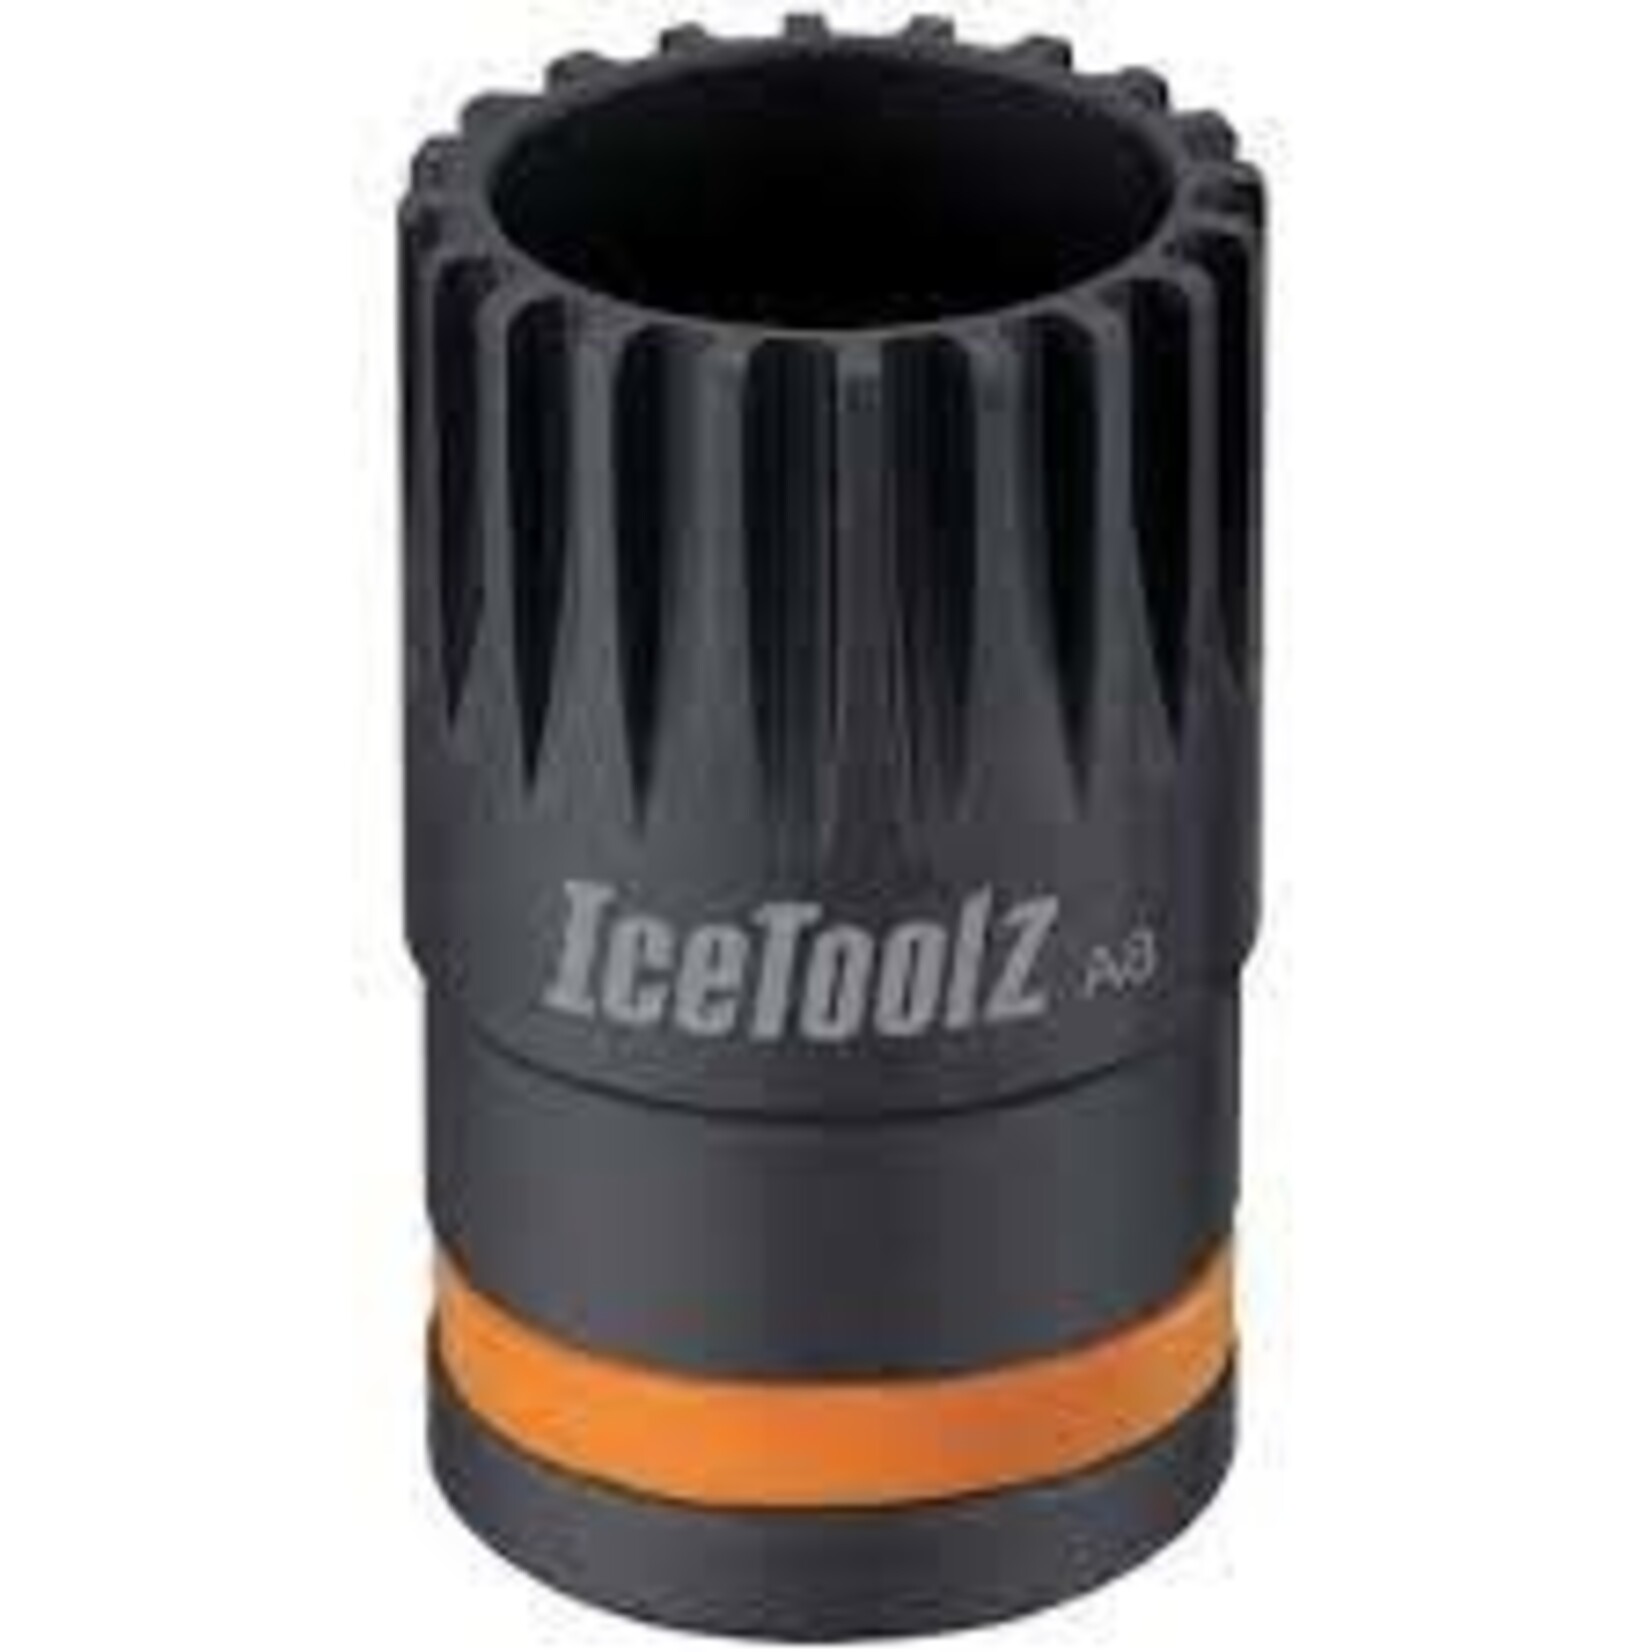 IceToolz IceToolz Deluxe Shimano/ISIS (20 notch) Bottom Bracket Cup Tool, 1/2" Drive - Impact